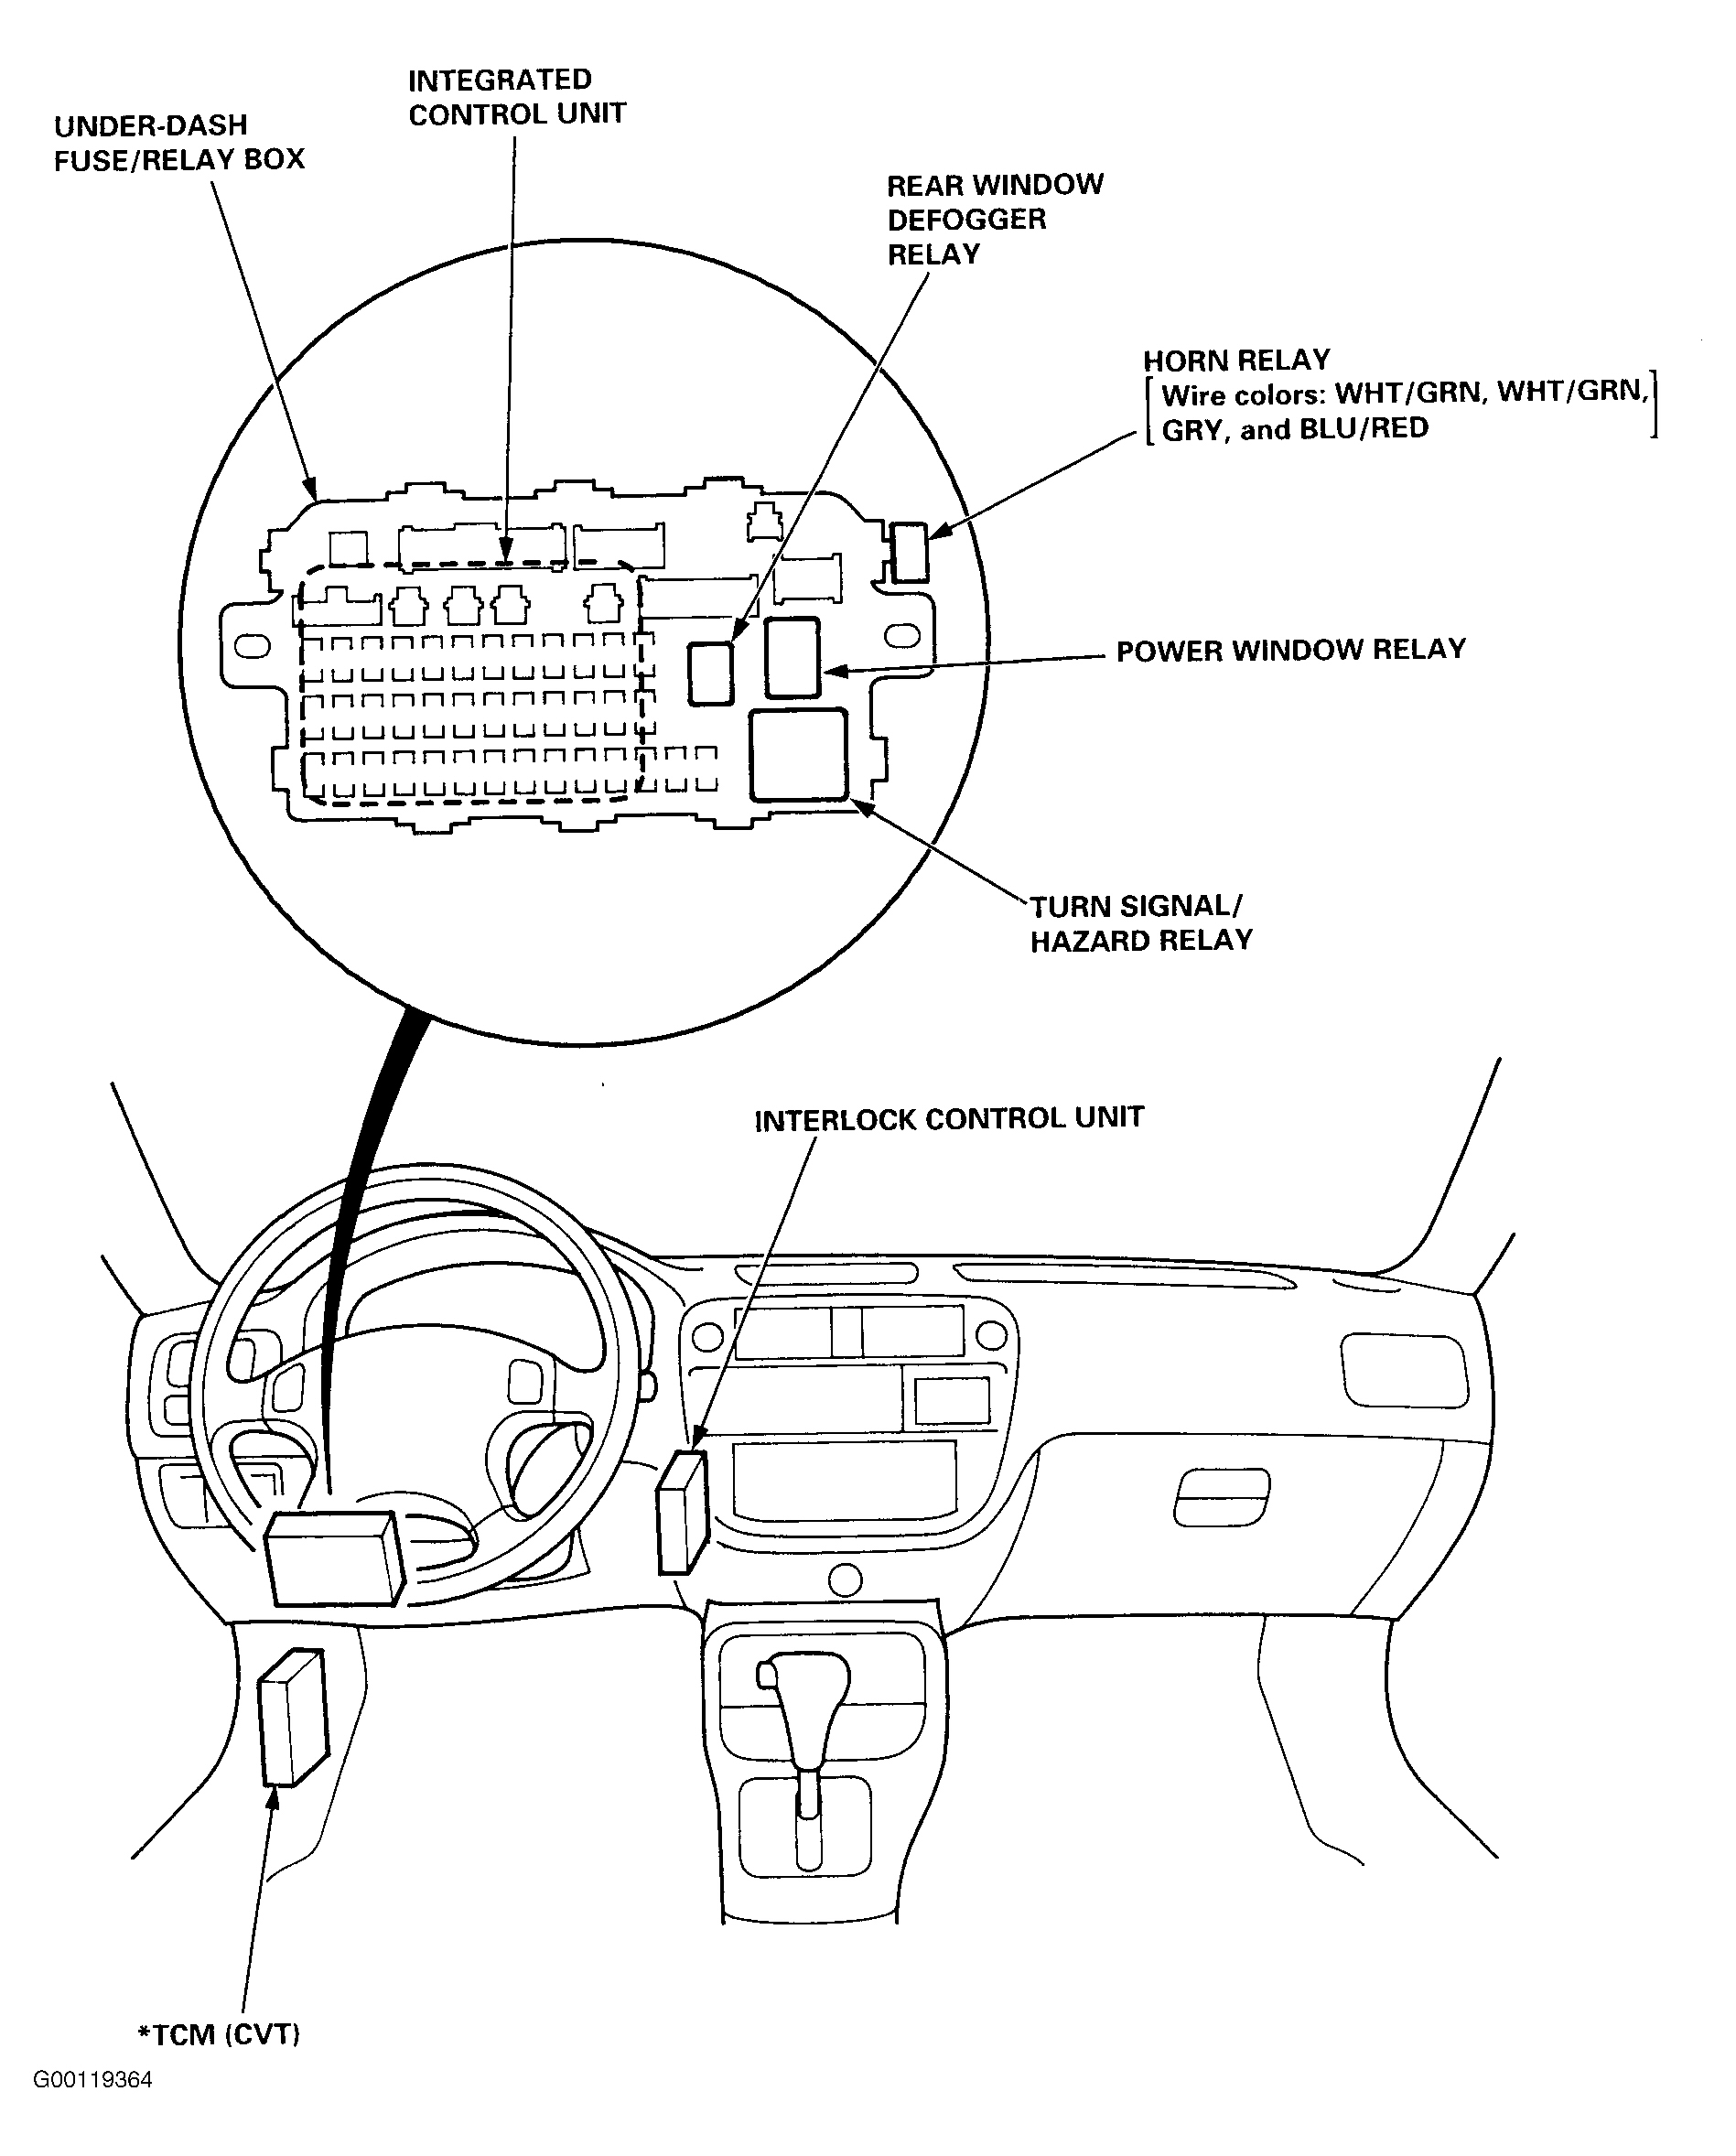 Honda Civic DX 1998 - Component Locations -  Locating Under-Dash Fuse/Relay Box (1996-97)